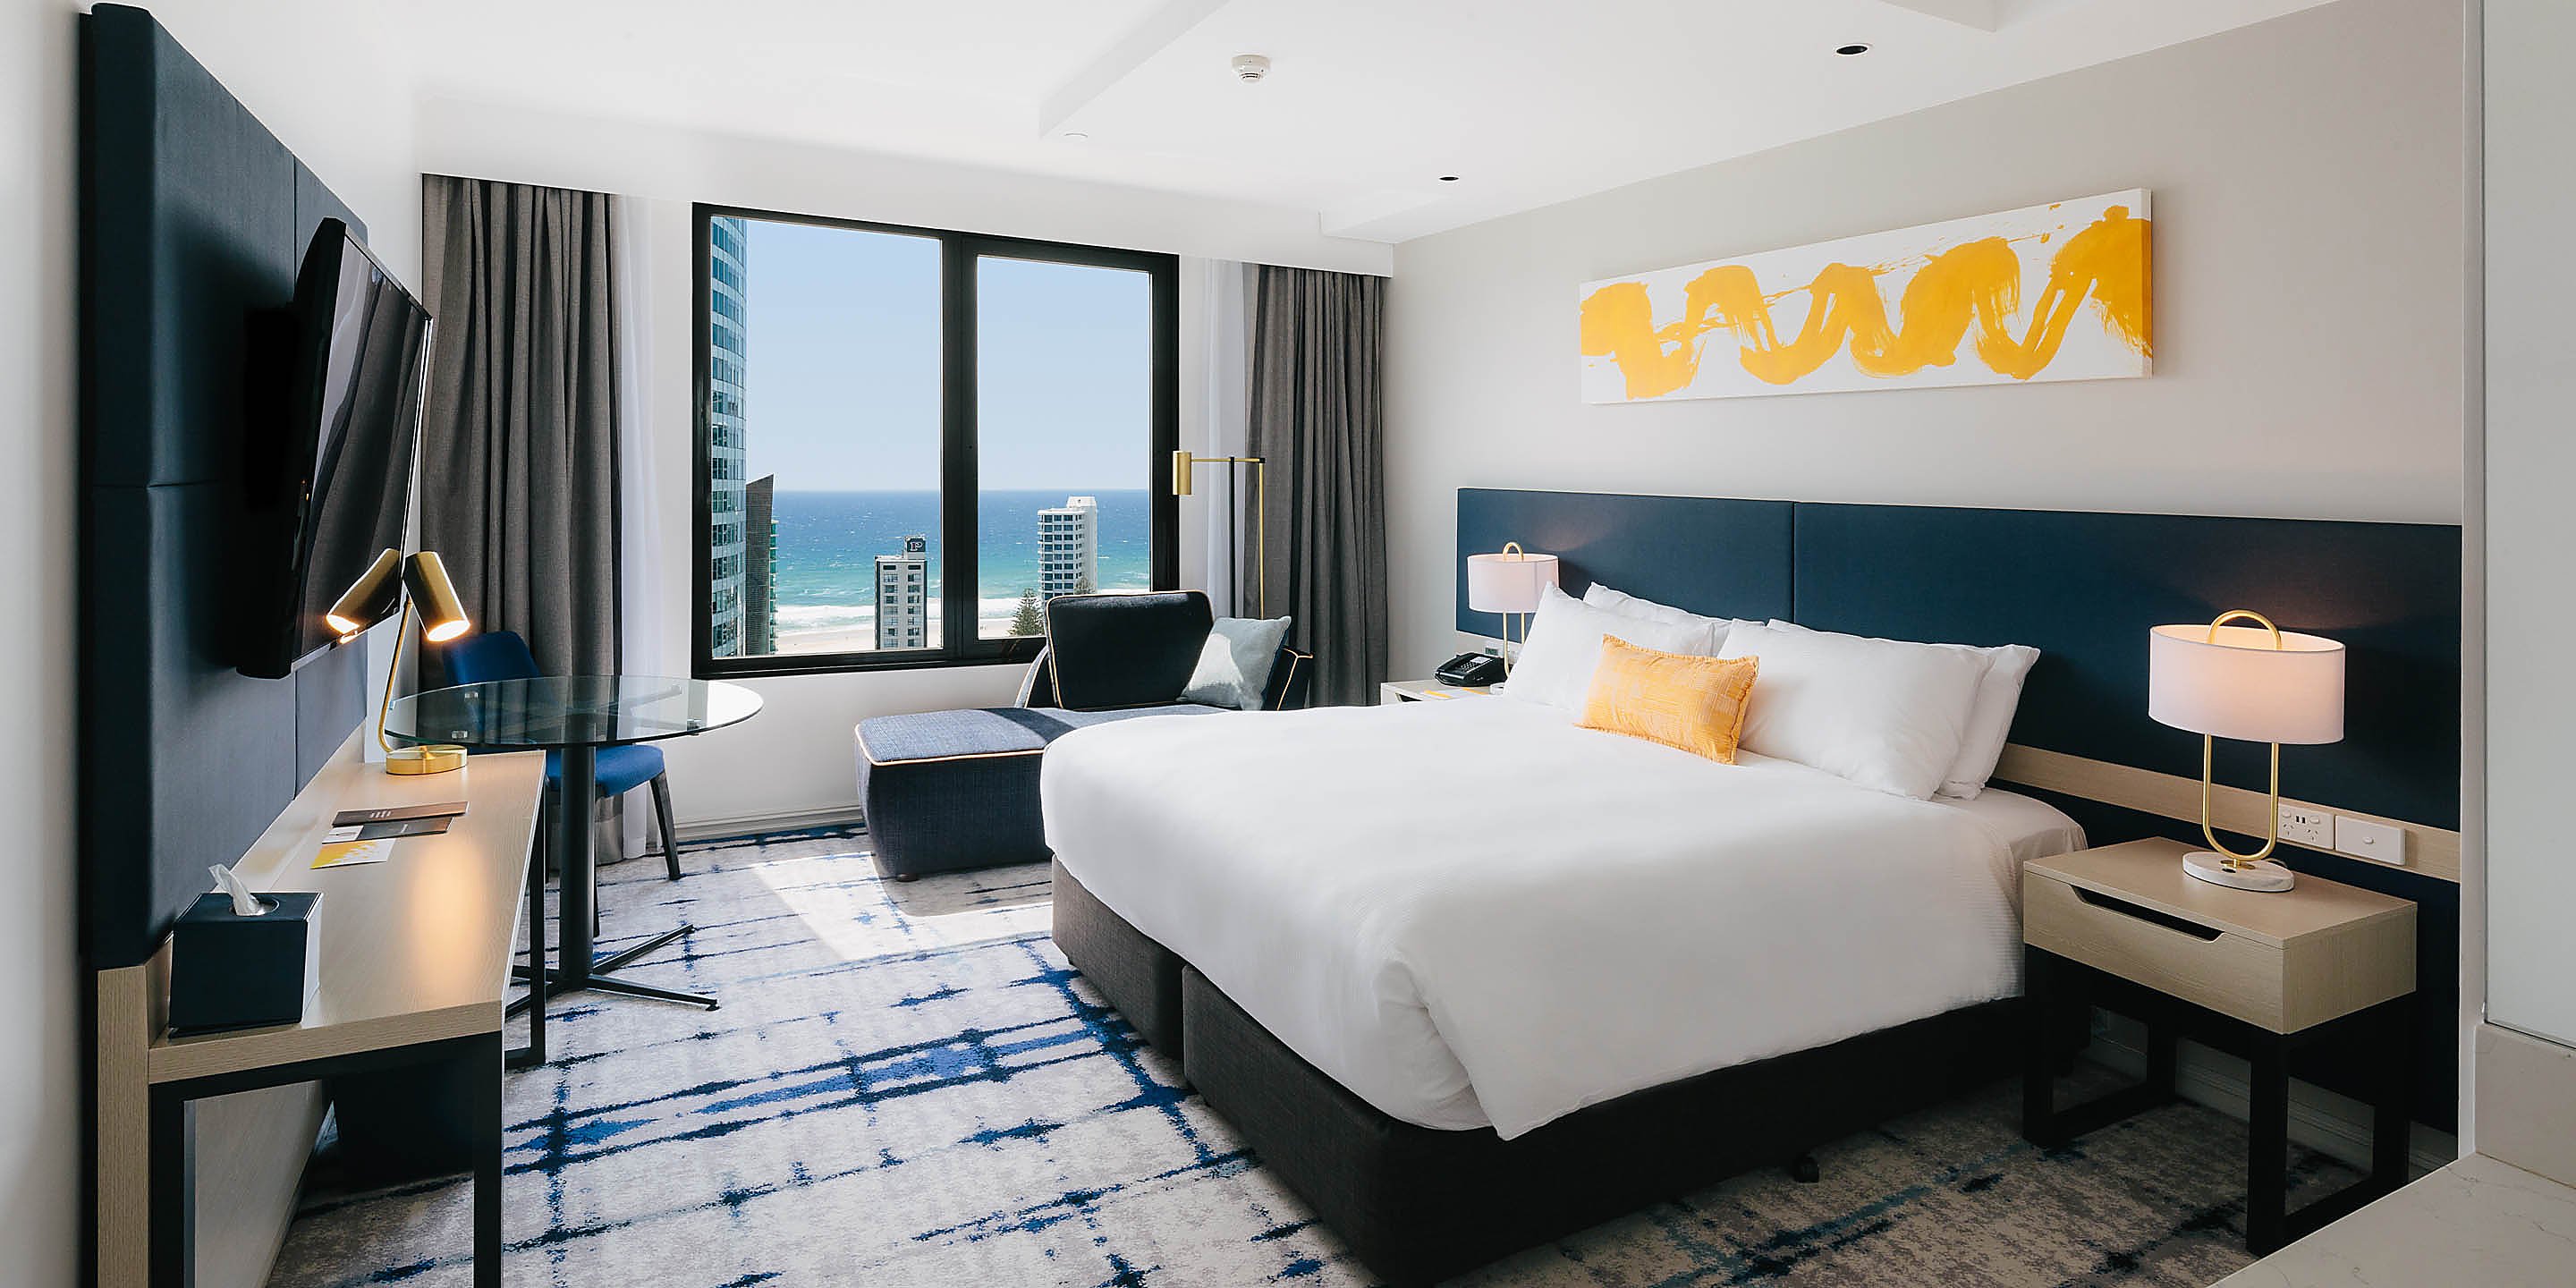 Voco-hotel-room-gold-coast